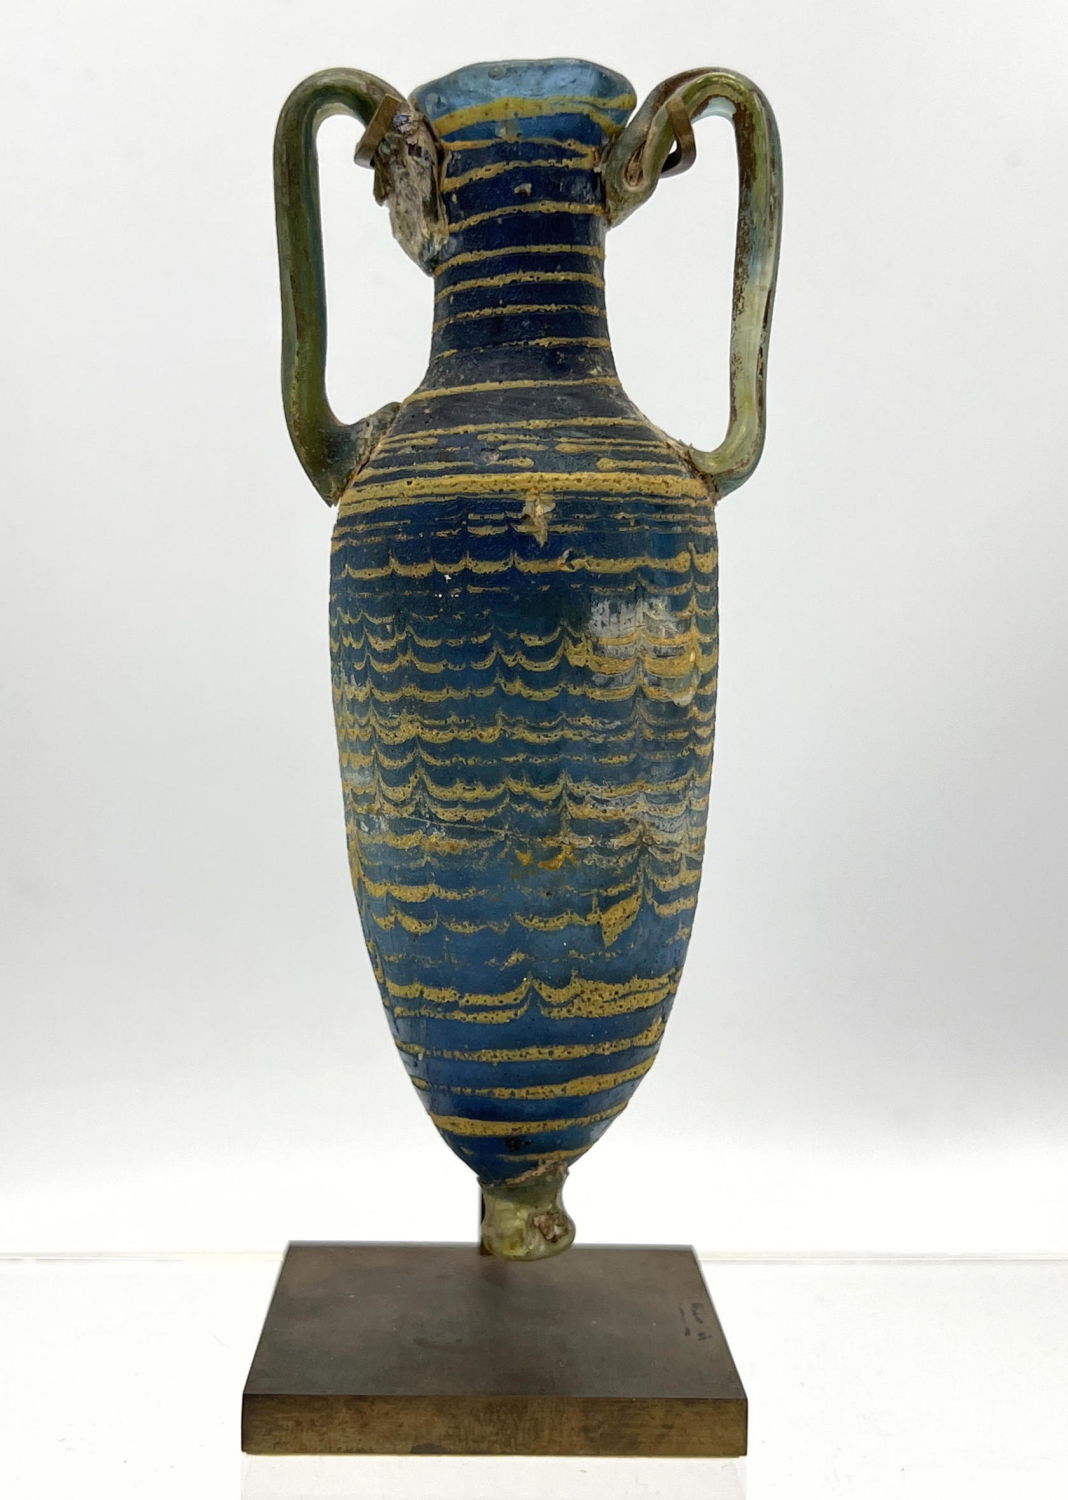 Unusual turquoise amphora vessel 2a6293